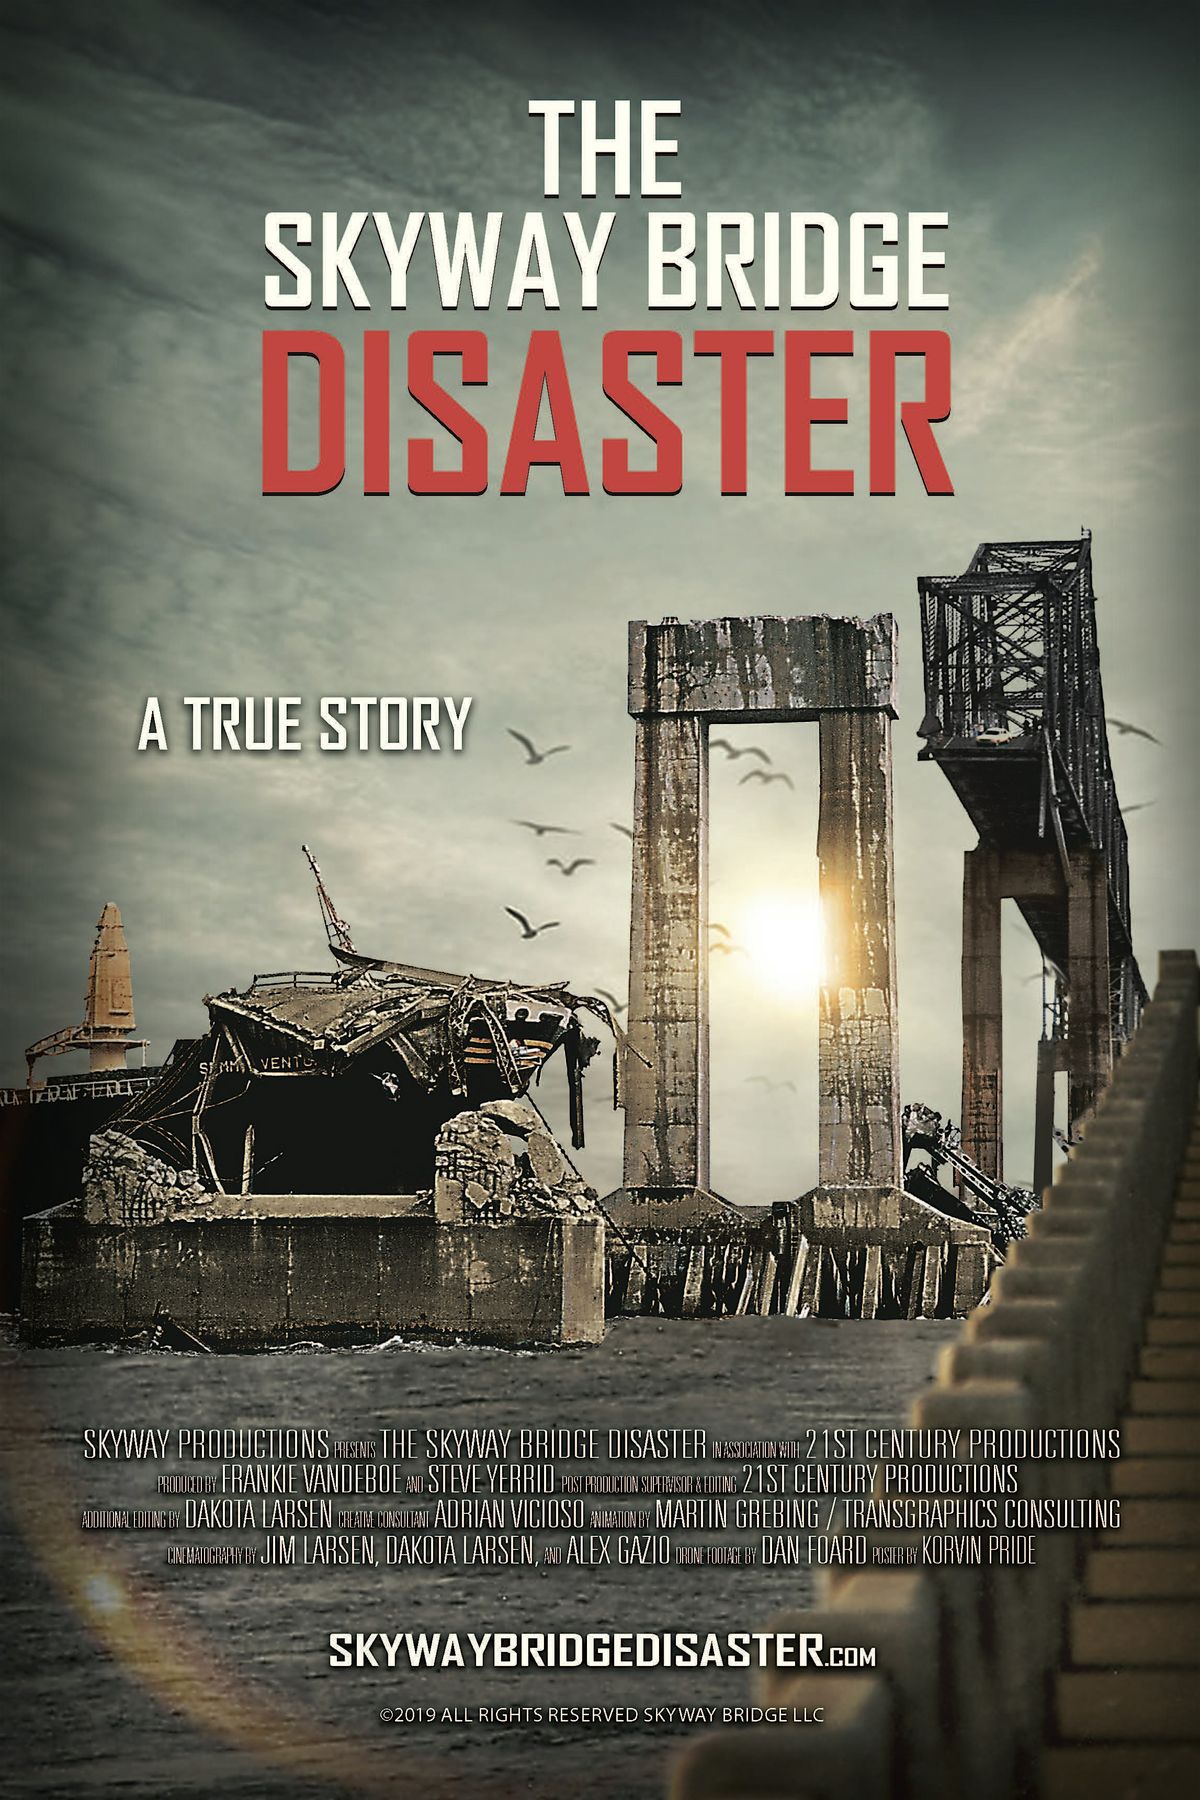 The Skyway Bridge Disaster Documentary Screening